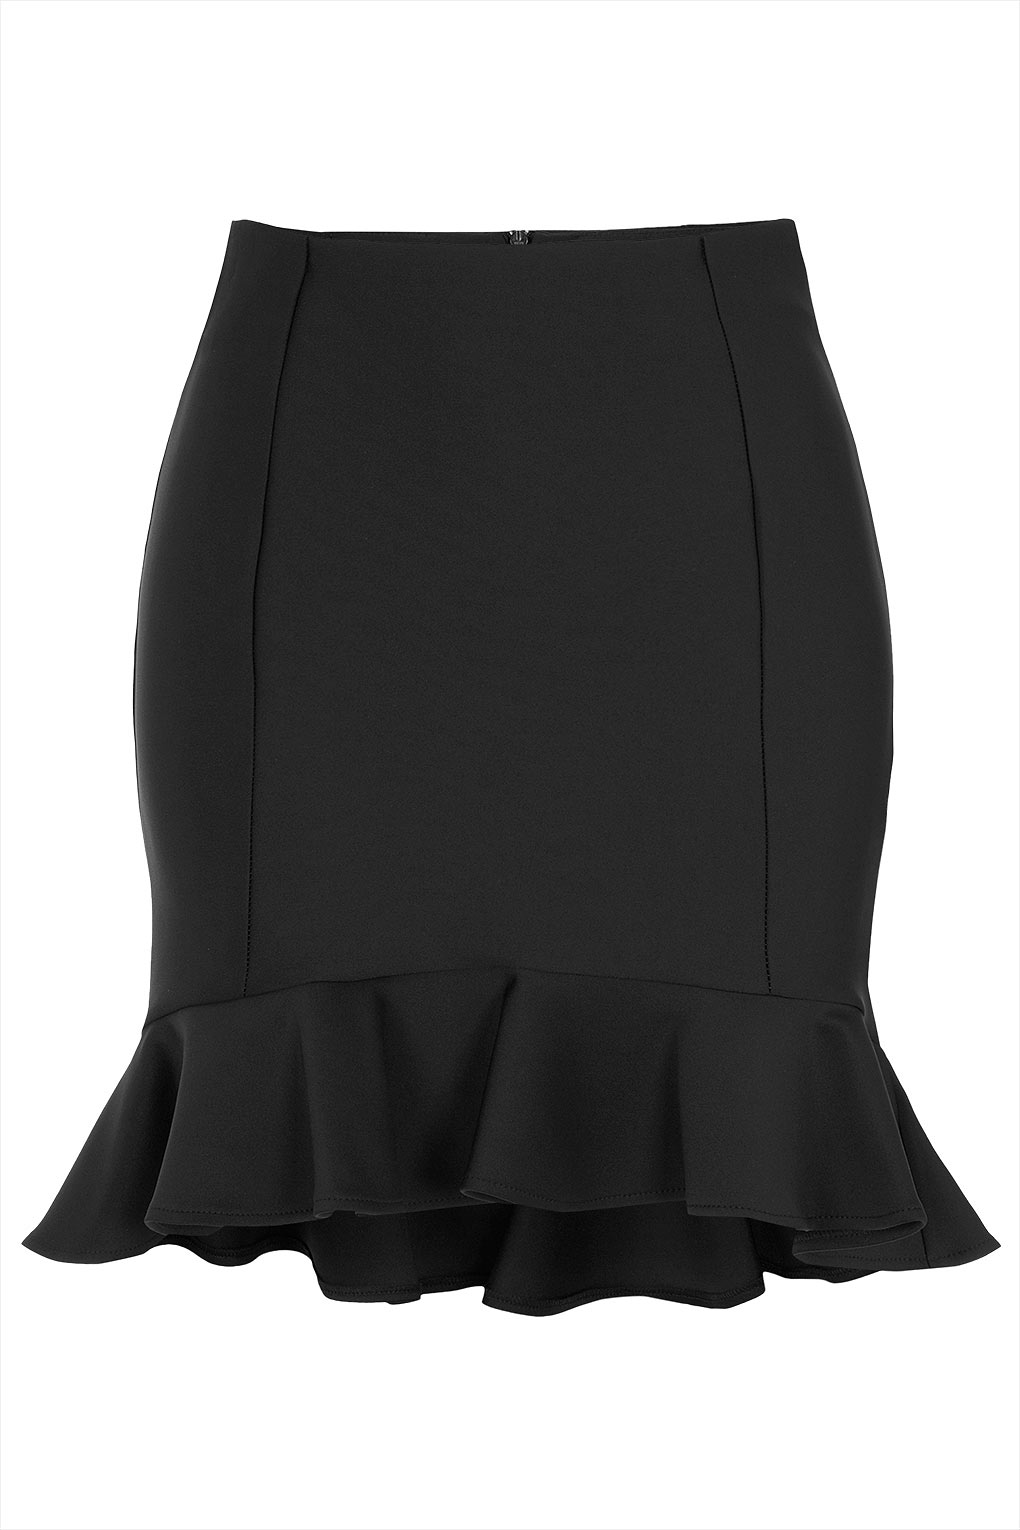 Topshop Black Ruffle Hem Skirt in Black | Lyst